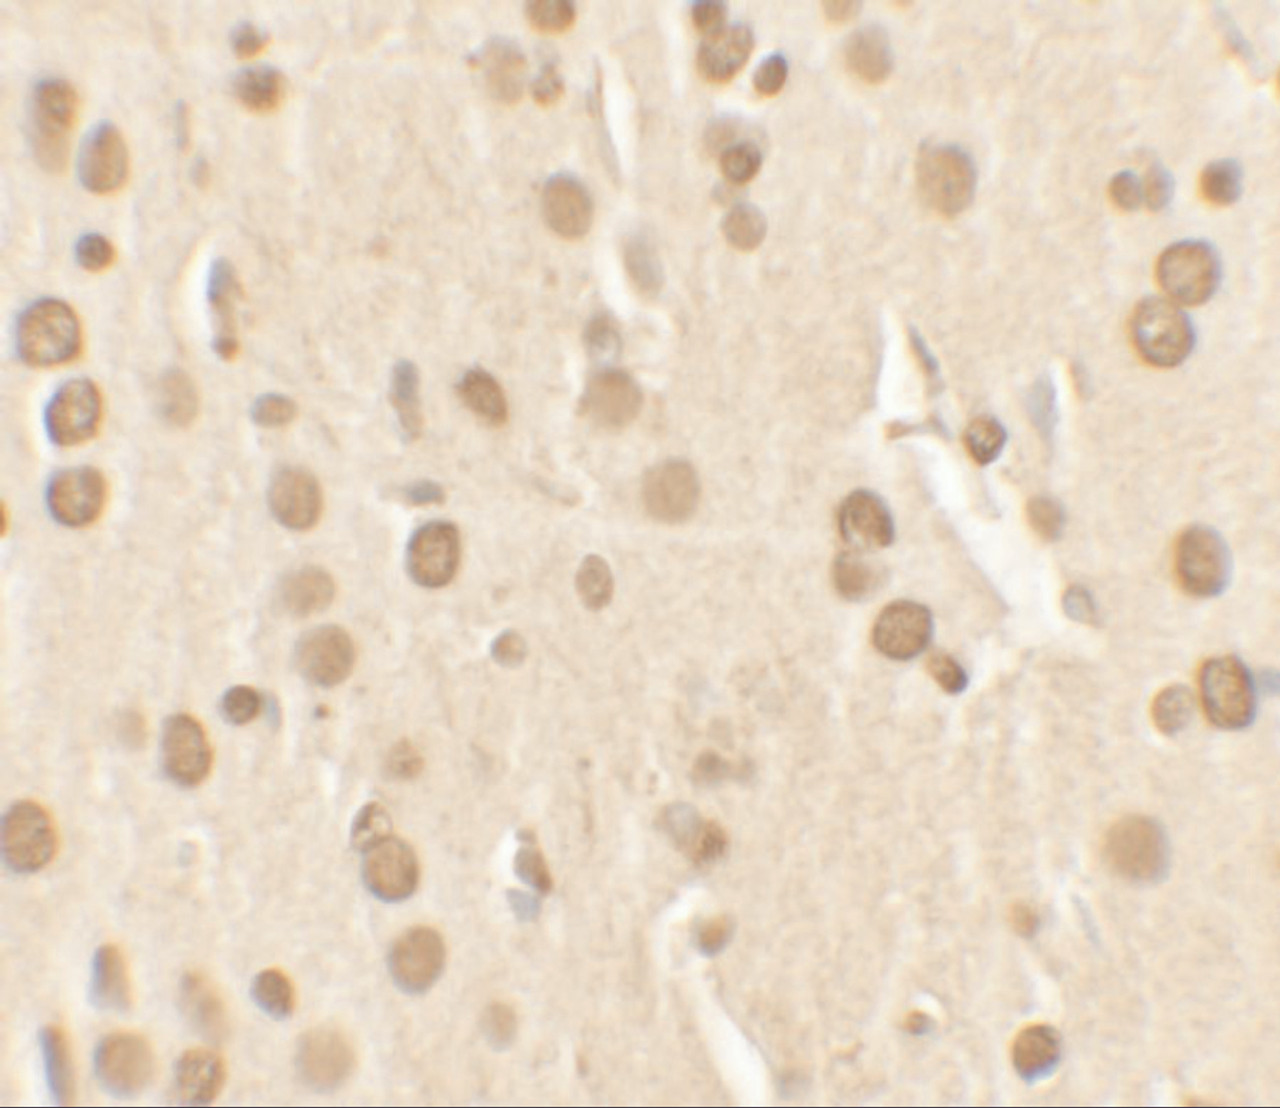 Immunohistochemistry of Nucleobindin-2 in rat brain tissue with Nucleobindin-2 antibody at 2.5 ug/ml.